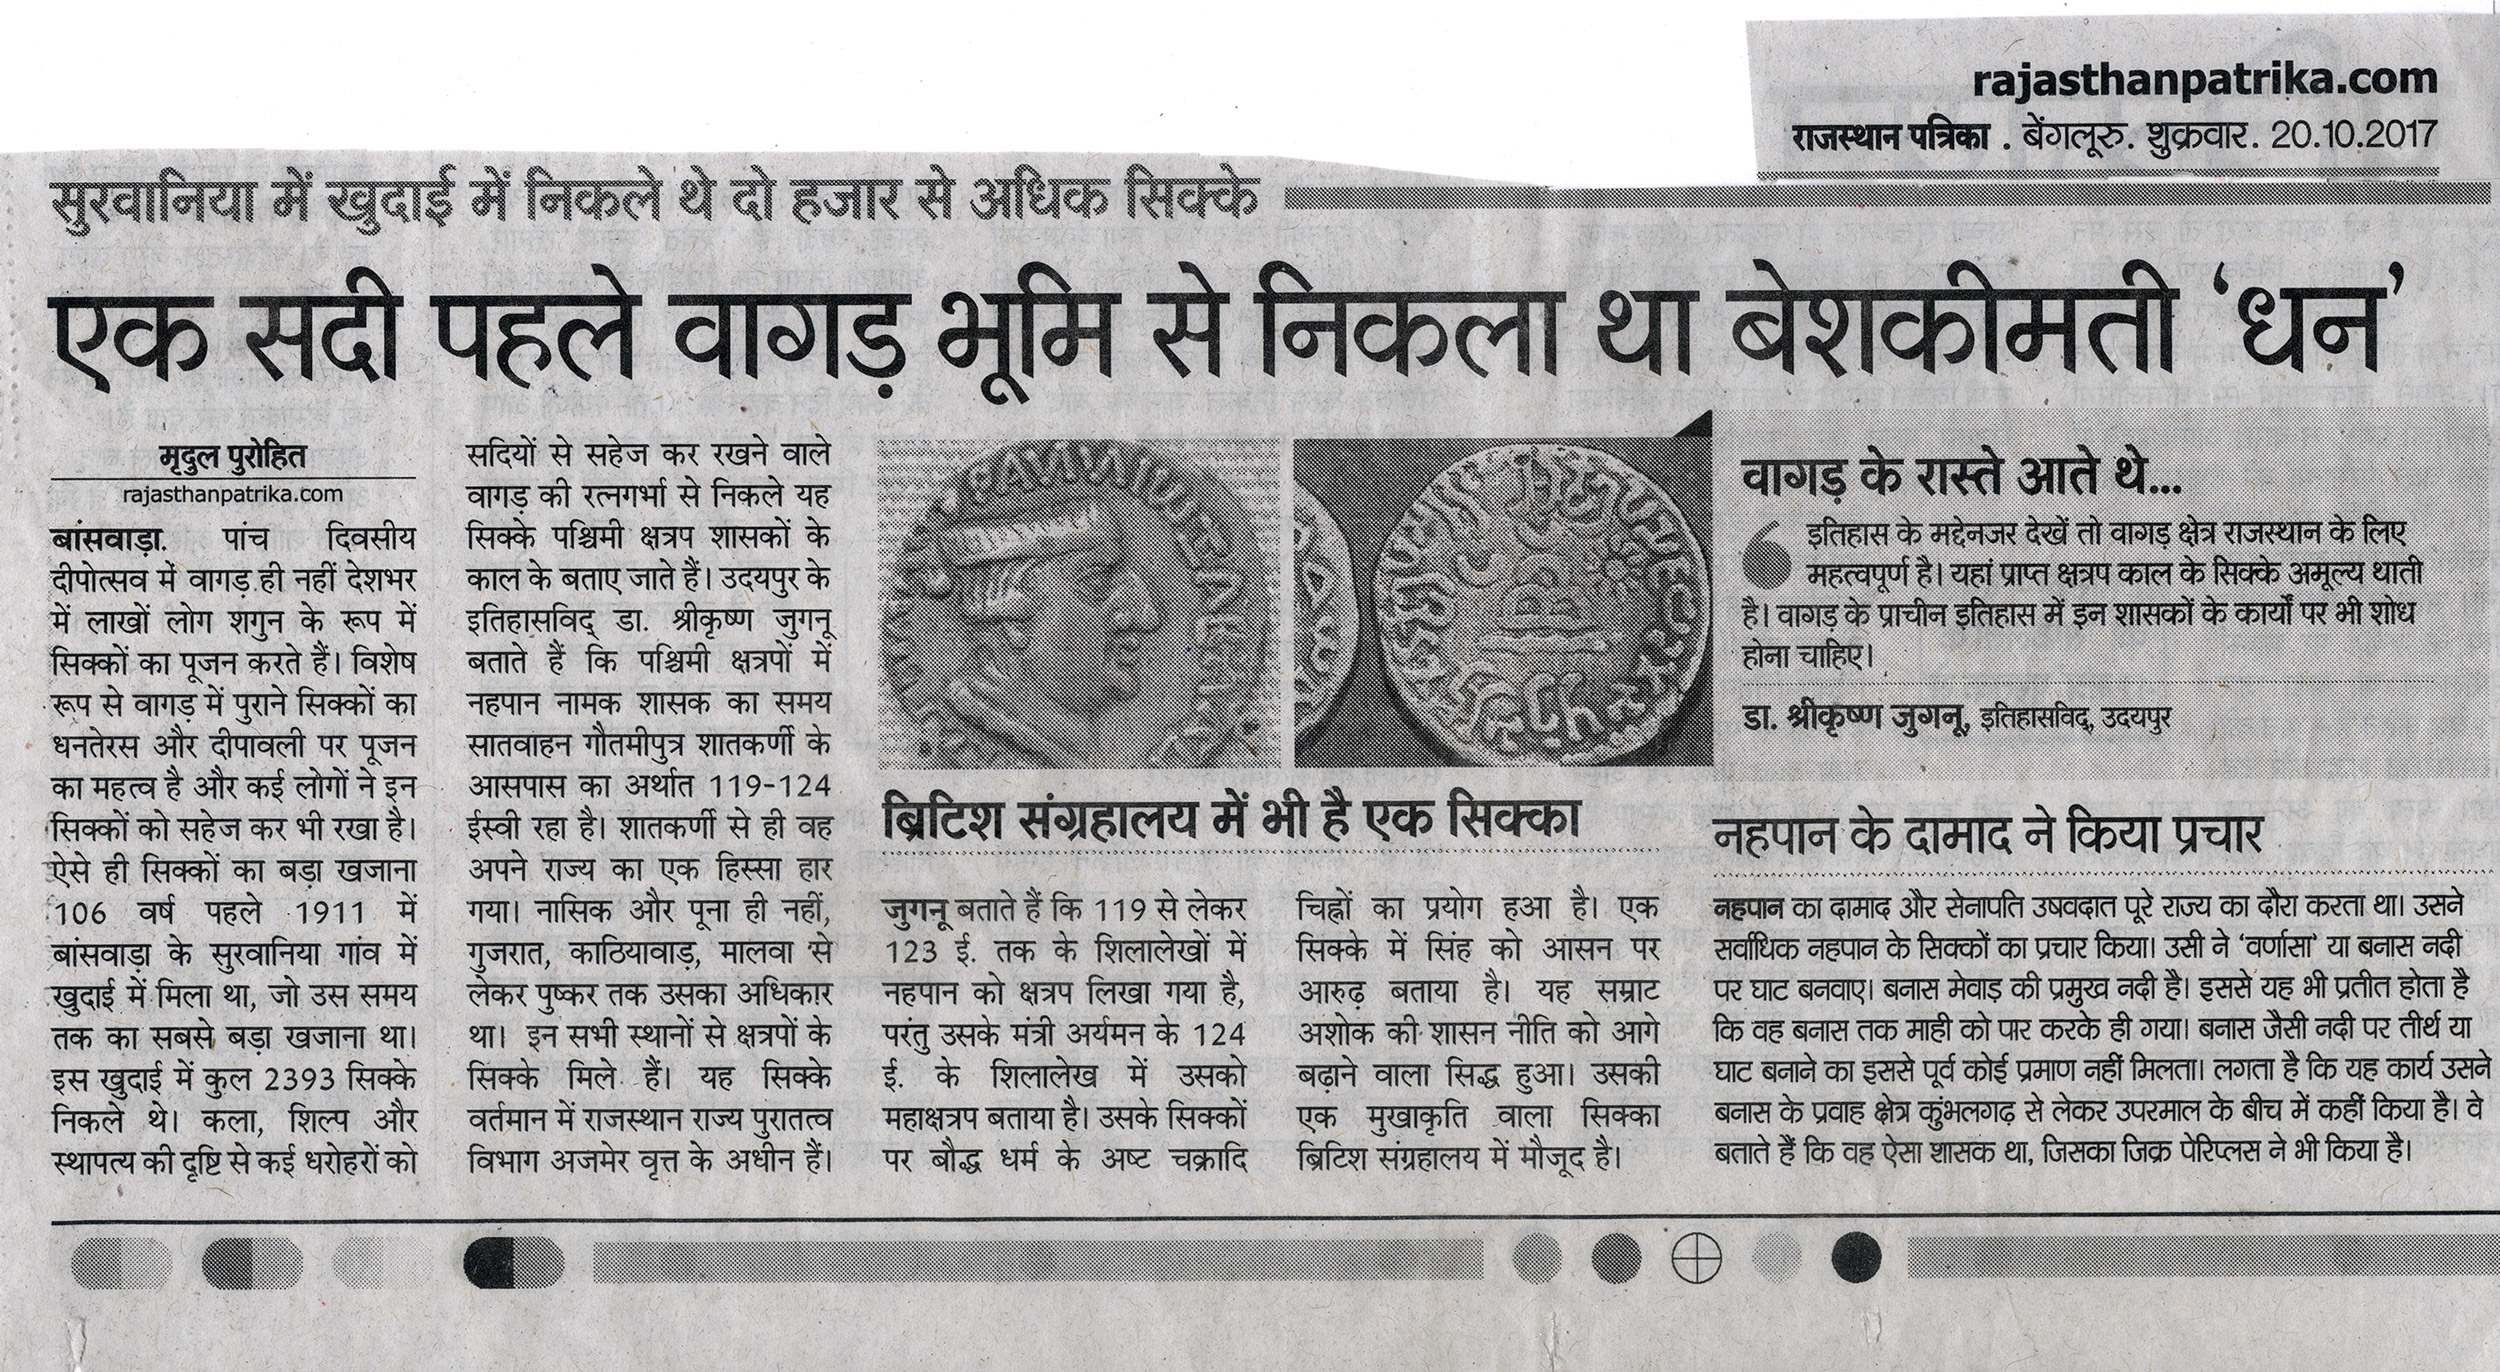 In Survaniya digging Found More 2000 Coins